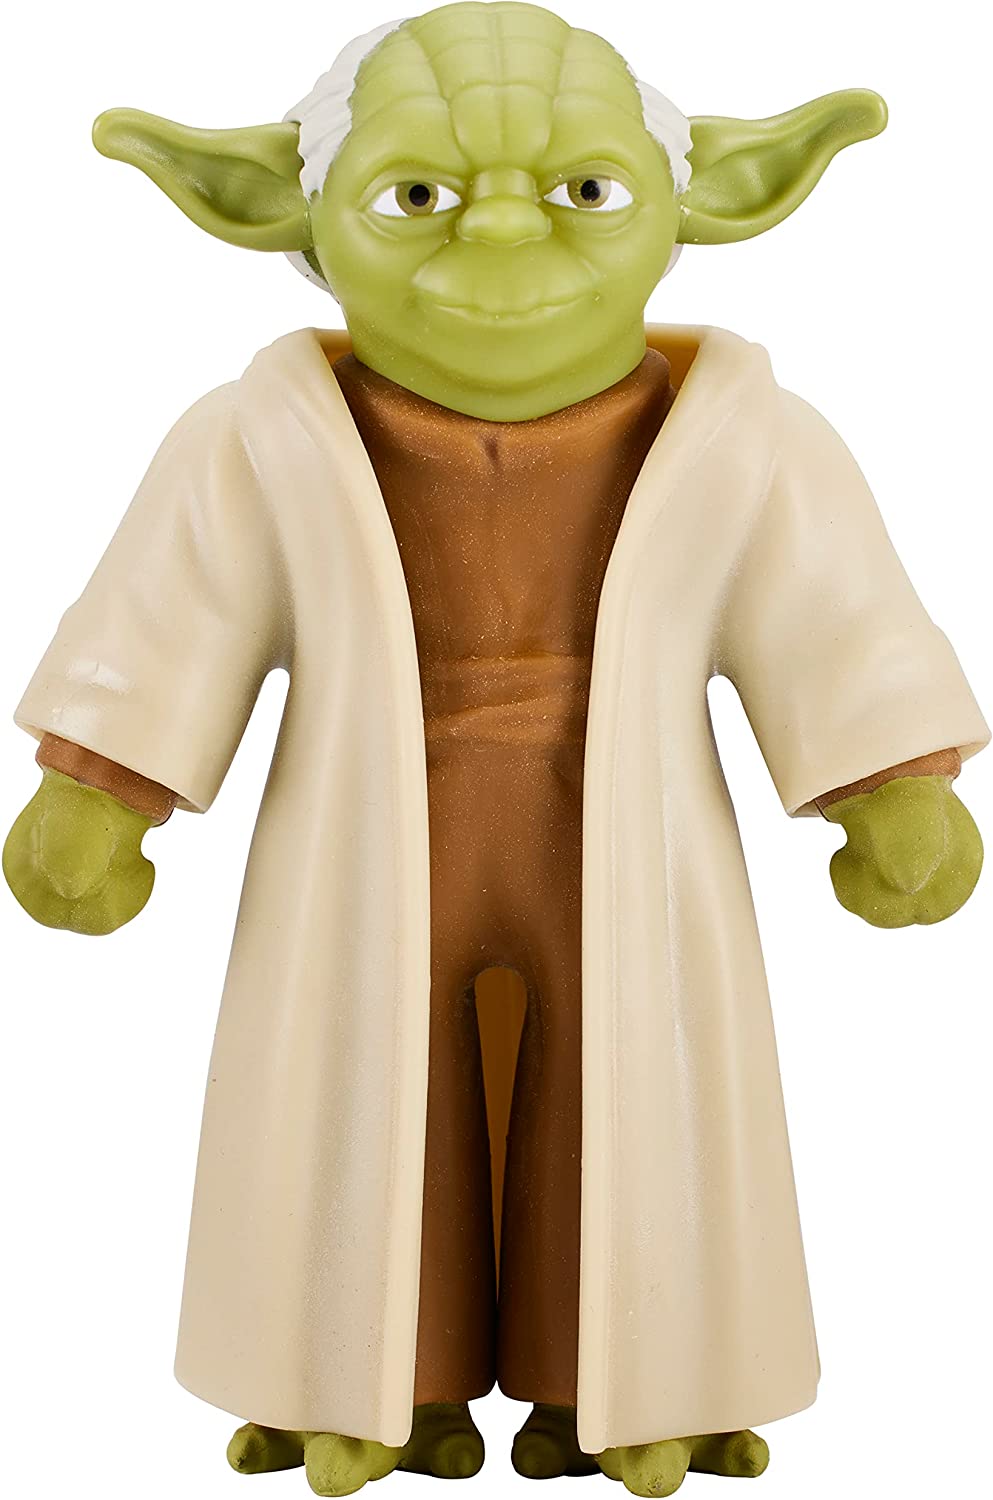 Star Wars - Stretch Yoda